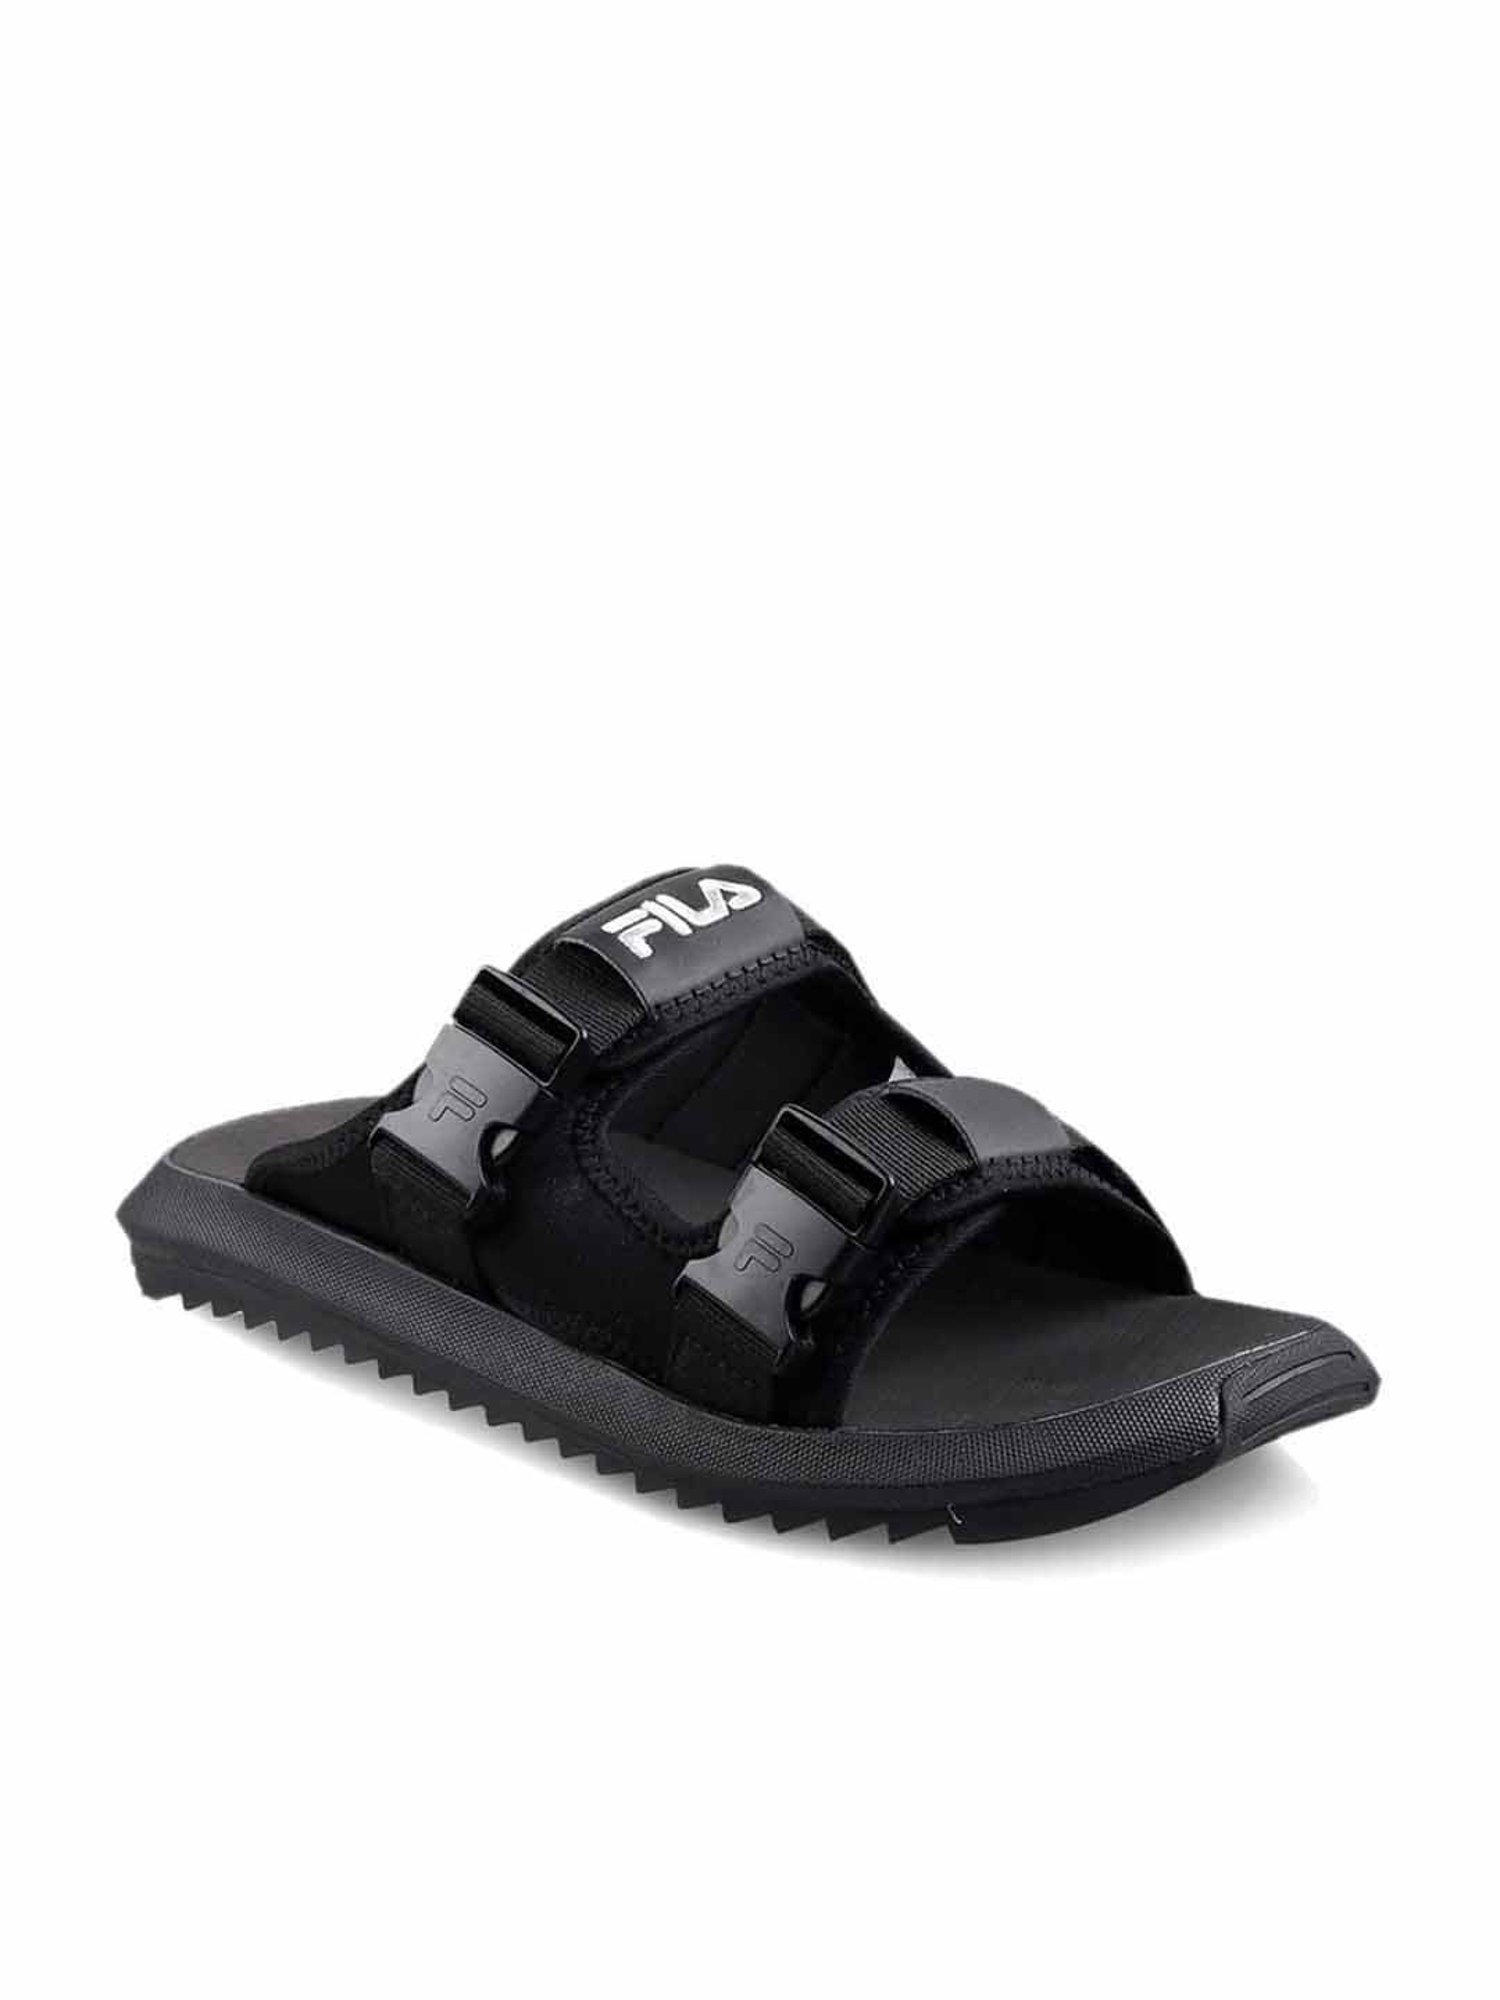 Fila Sandals and Slides for Men | Online Sale up to 75% off | Lyst